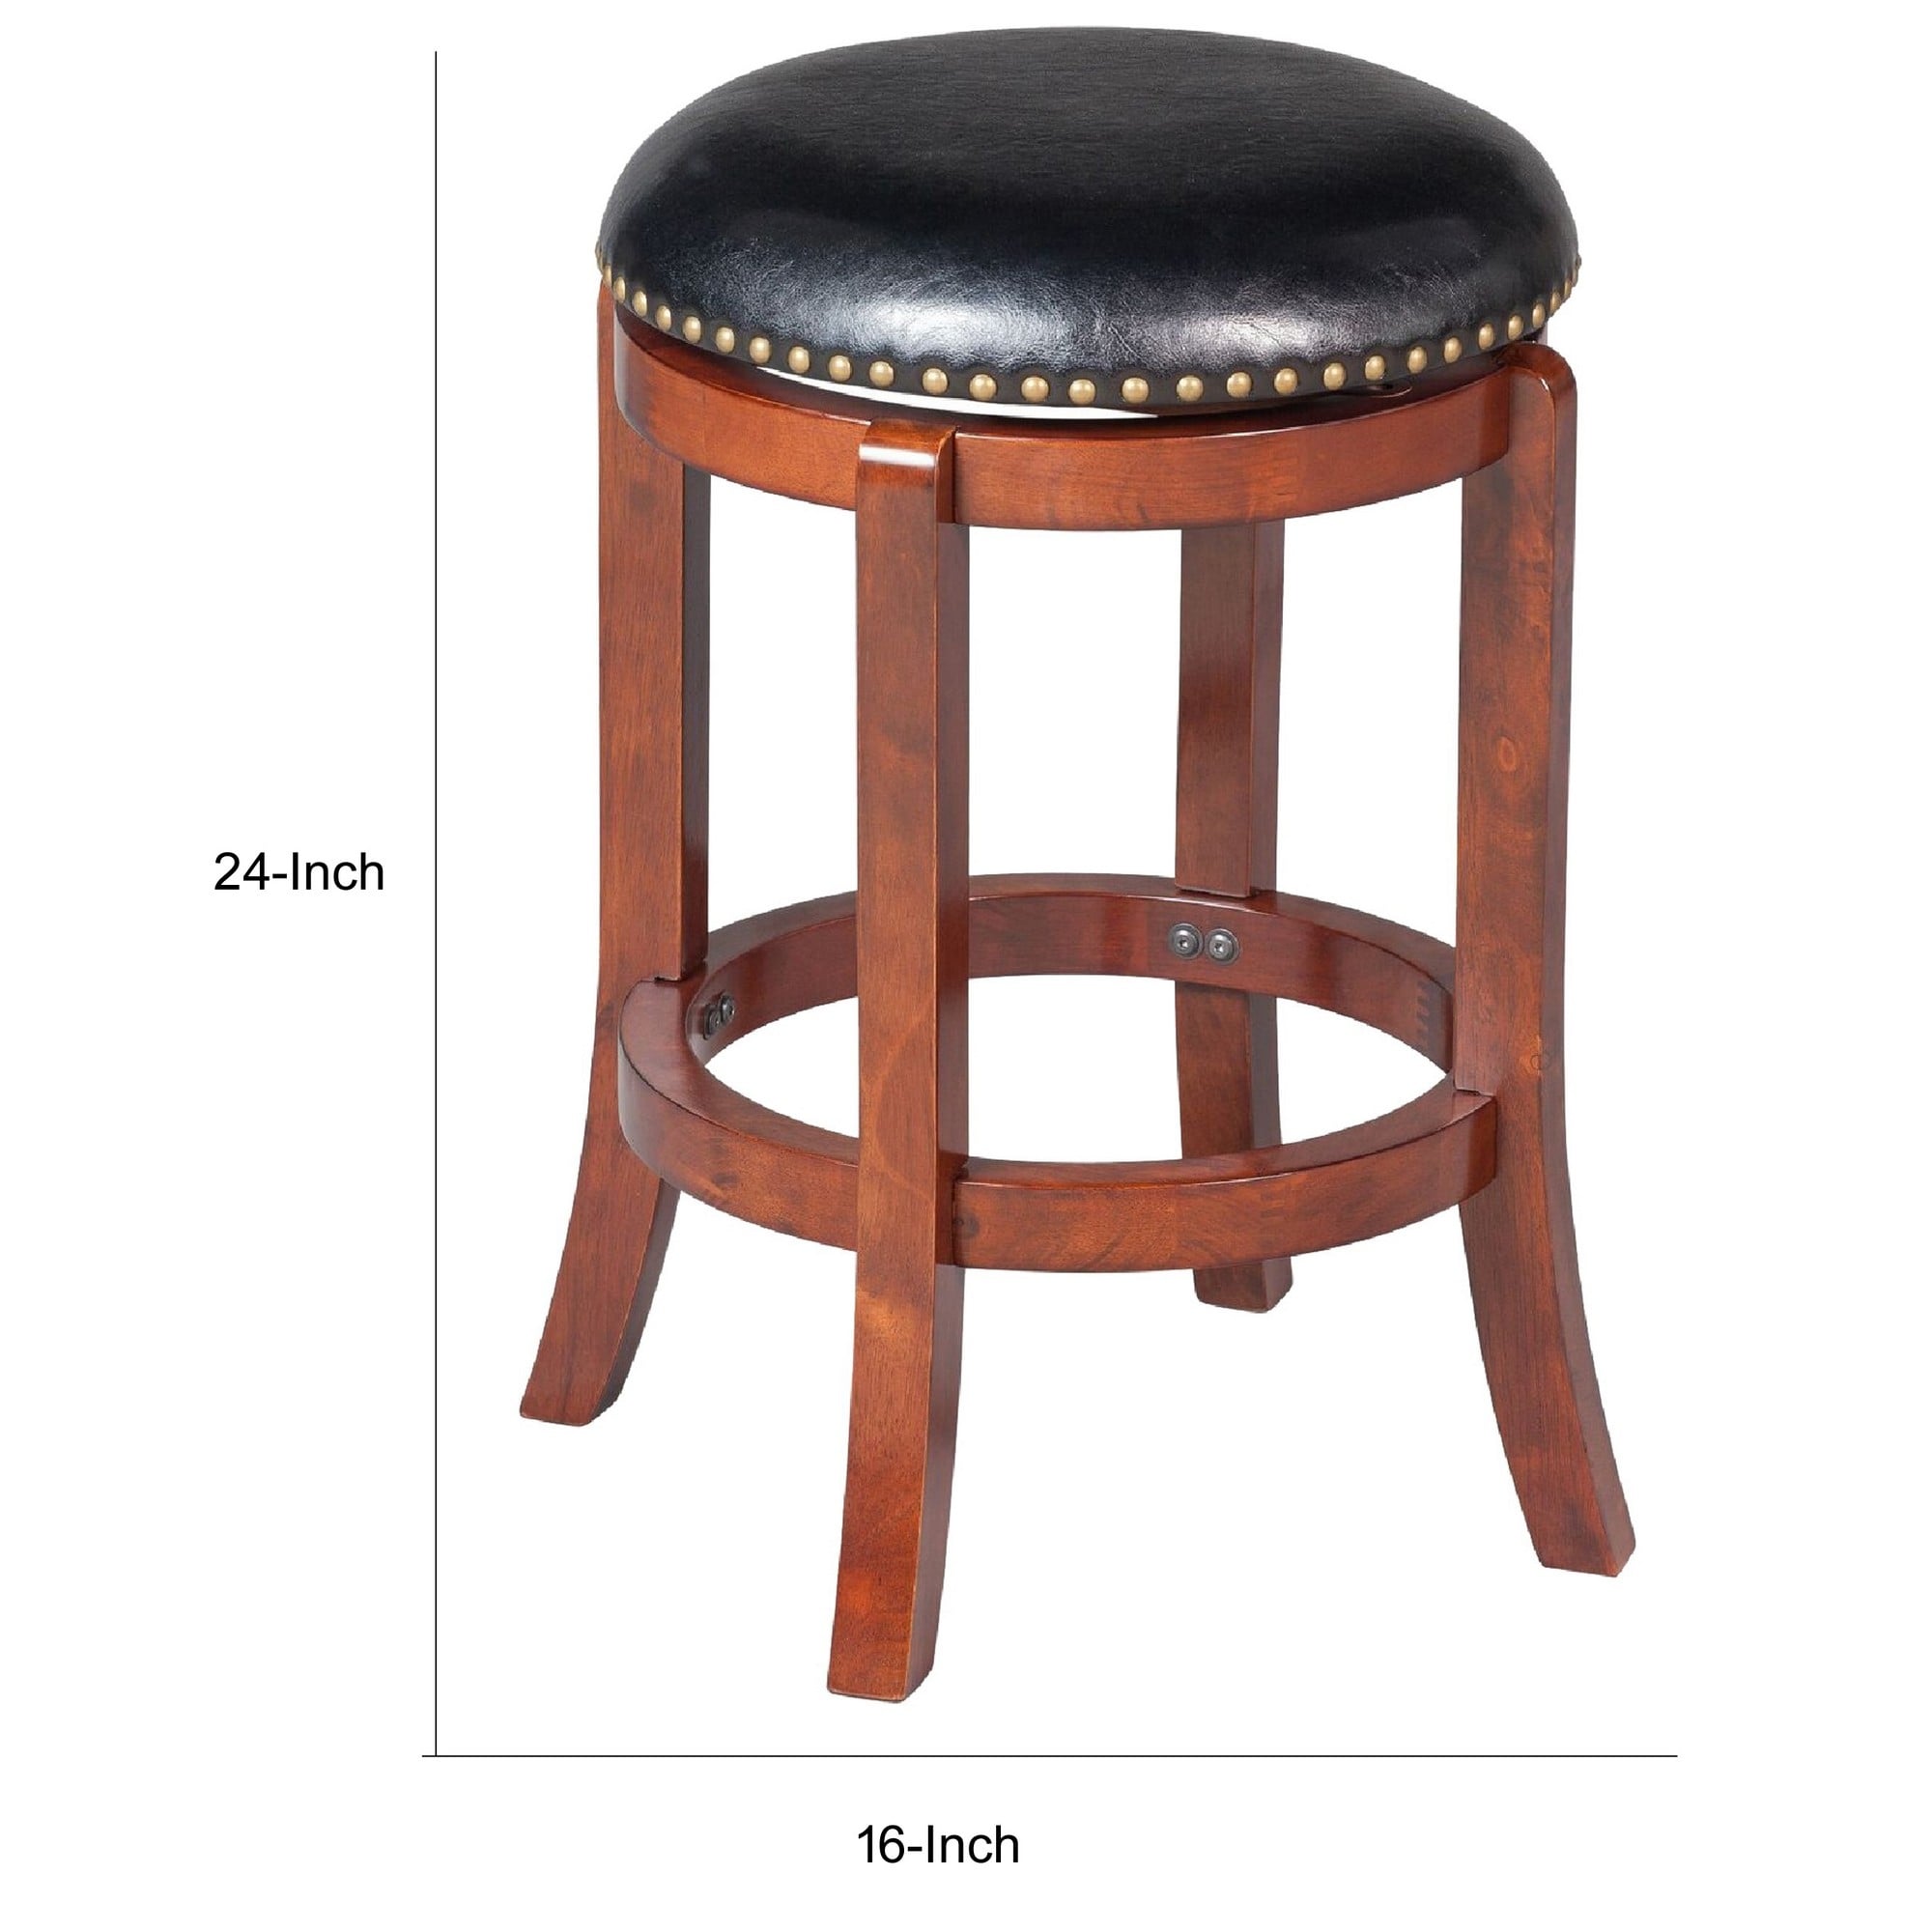 Ovi 24 Inch Swivel Counter Stool In Cherry Brown Wood, Nailhead Trim Seat